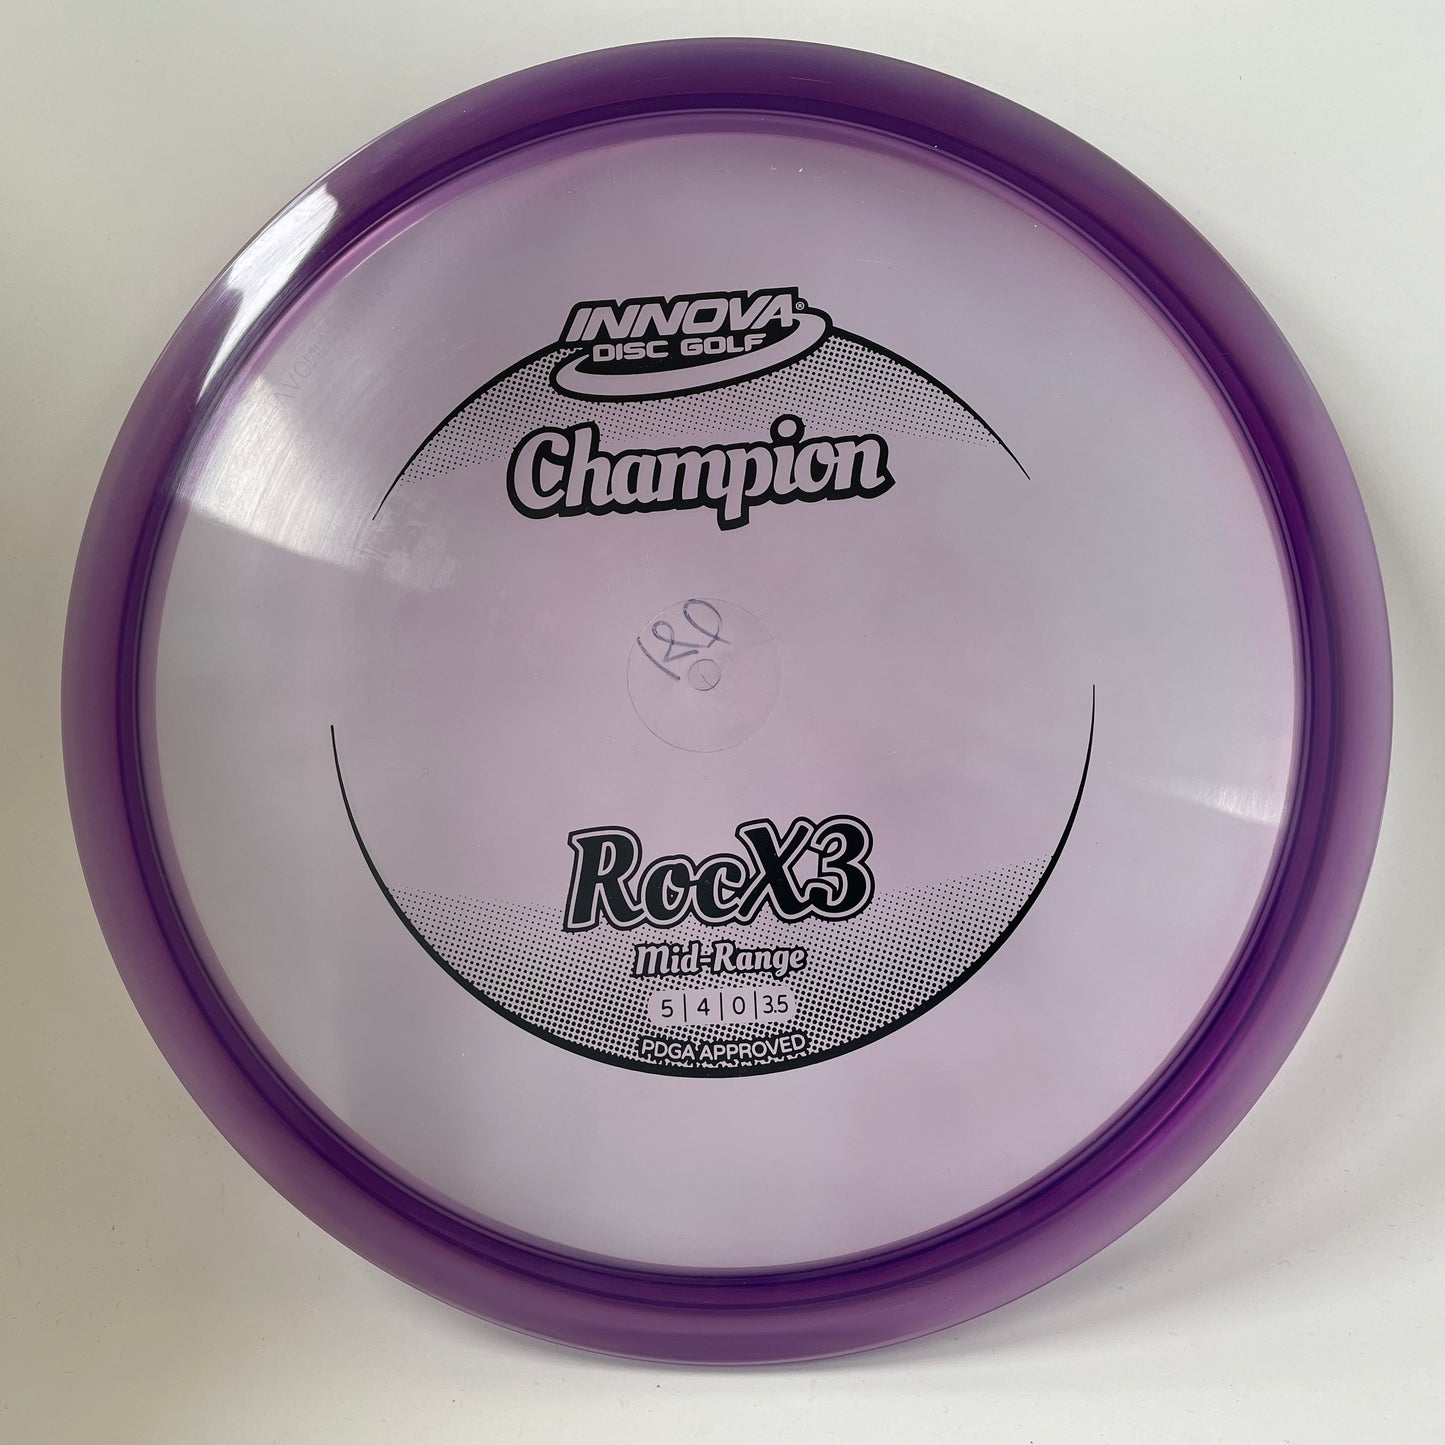 Innova Champion RocX3